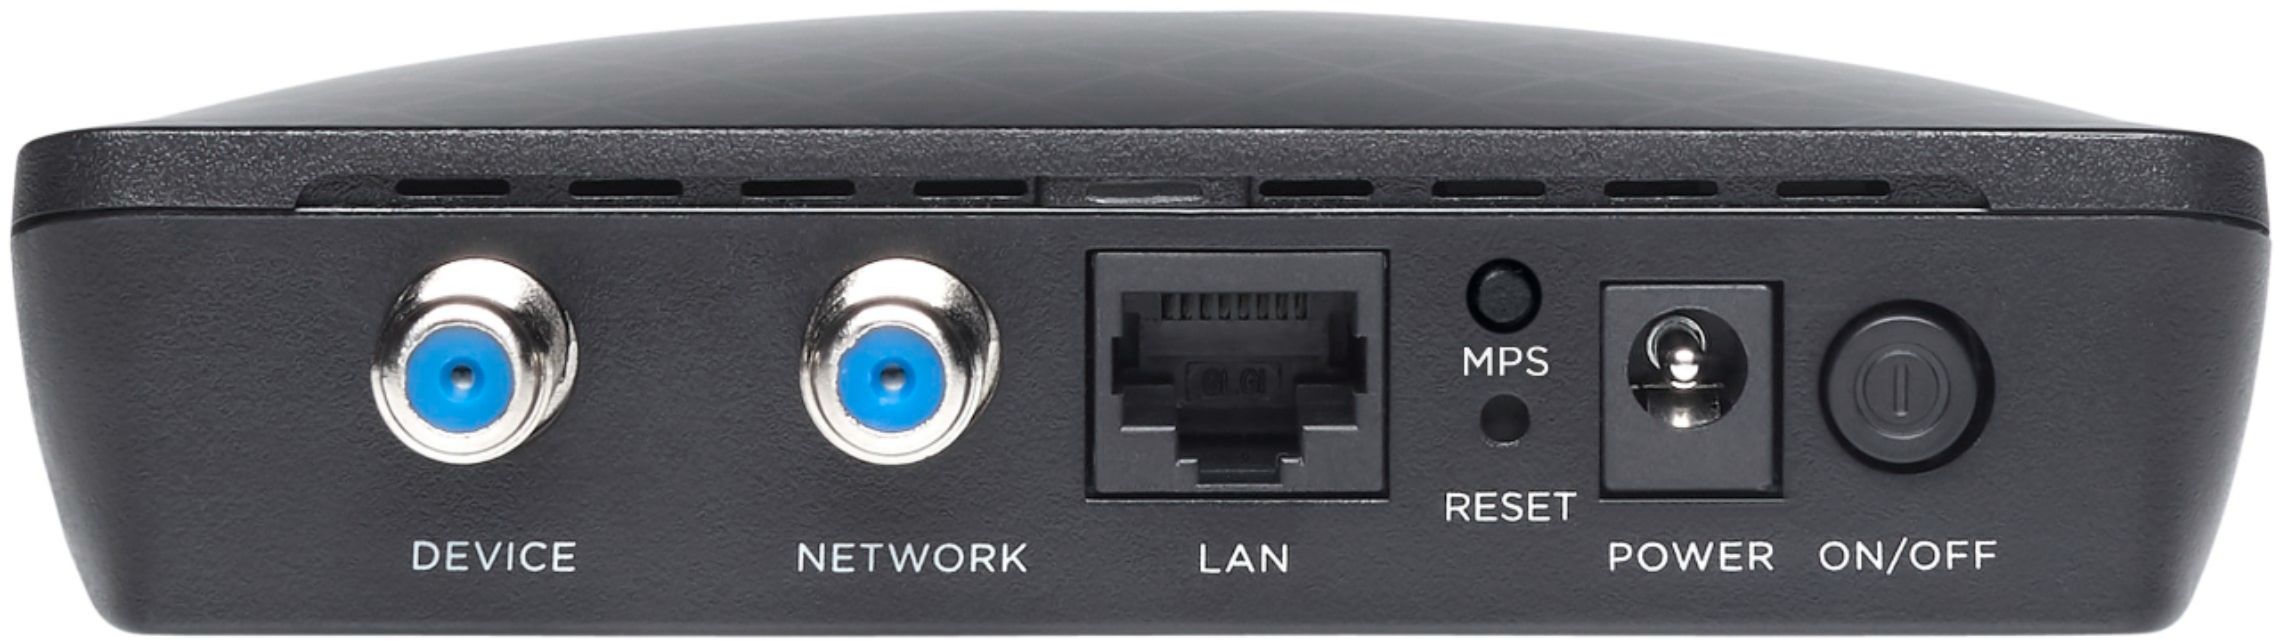 Angle View: Motorola - MM1025 MoCA Adapter for Ethernet - Black